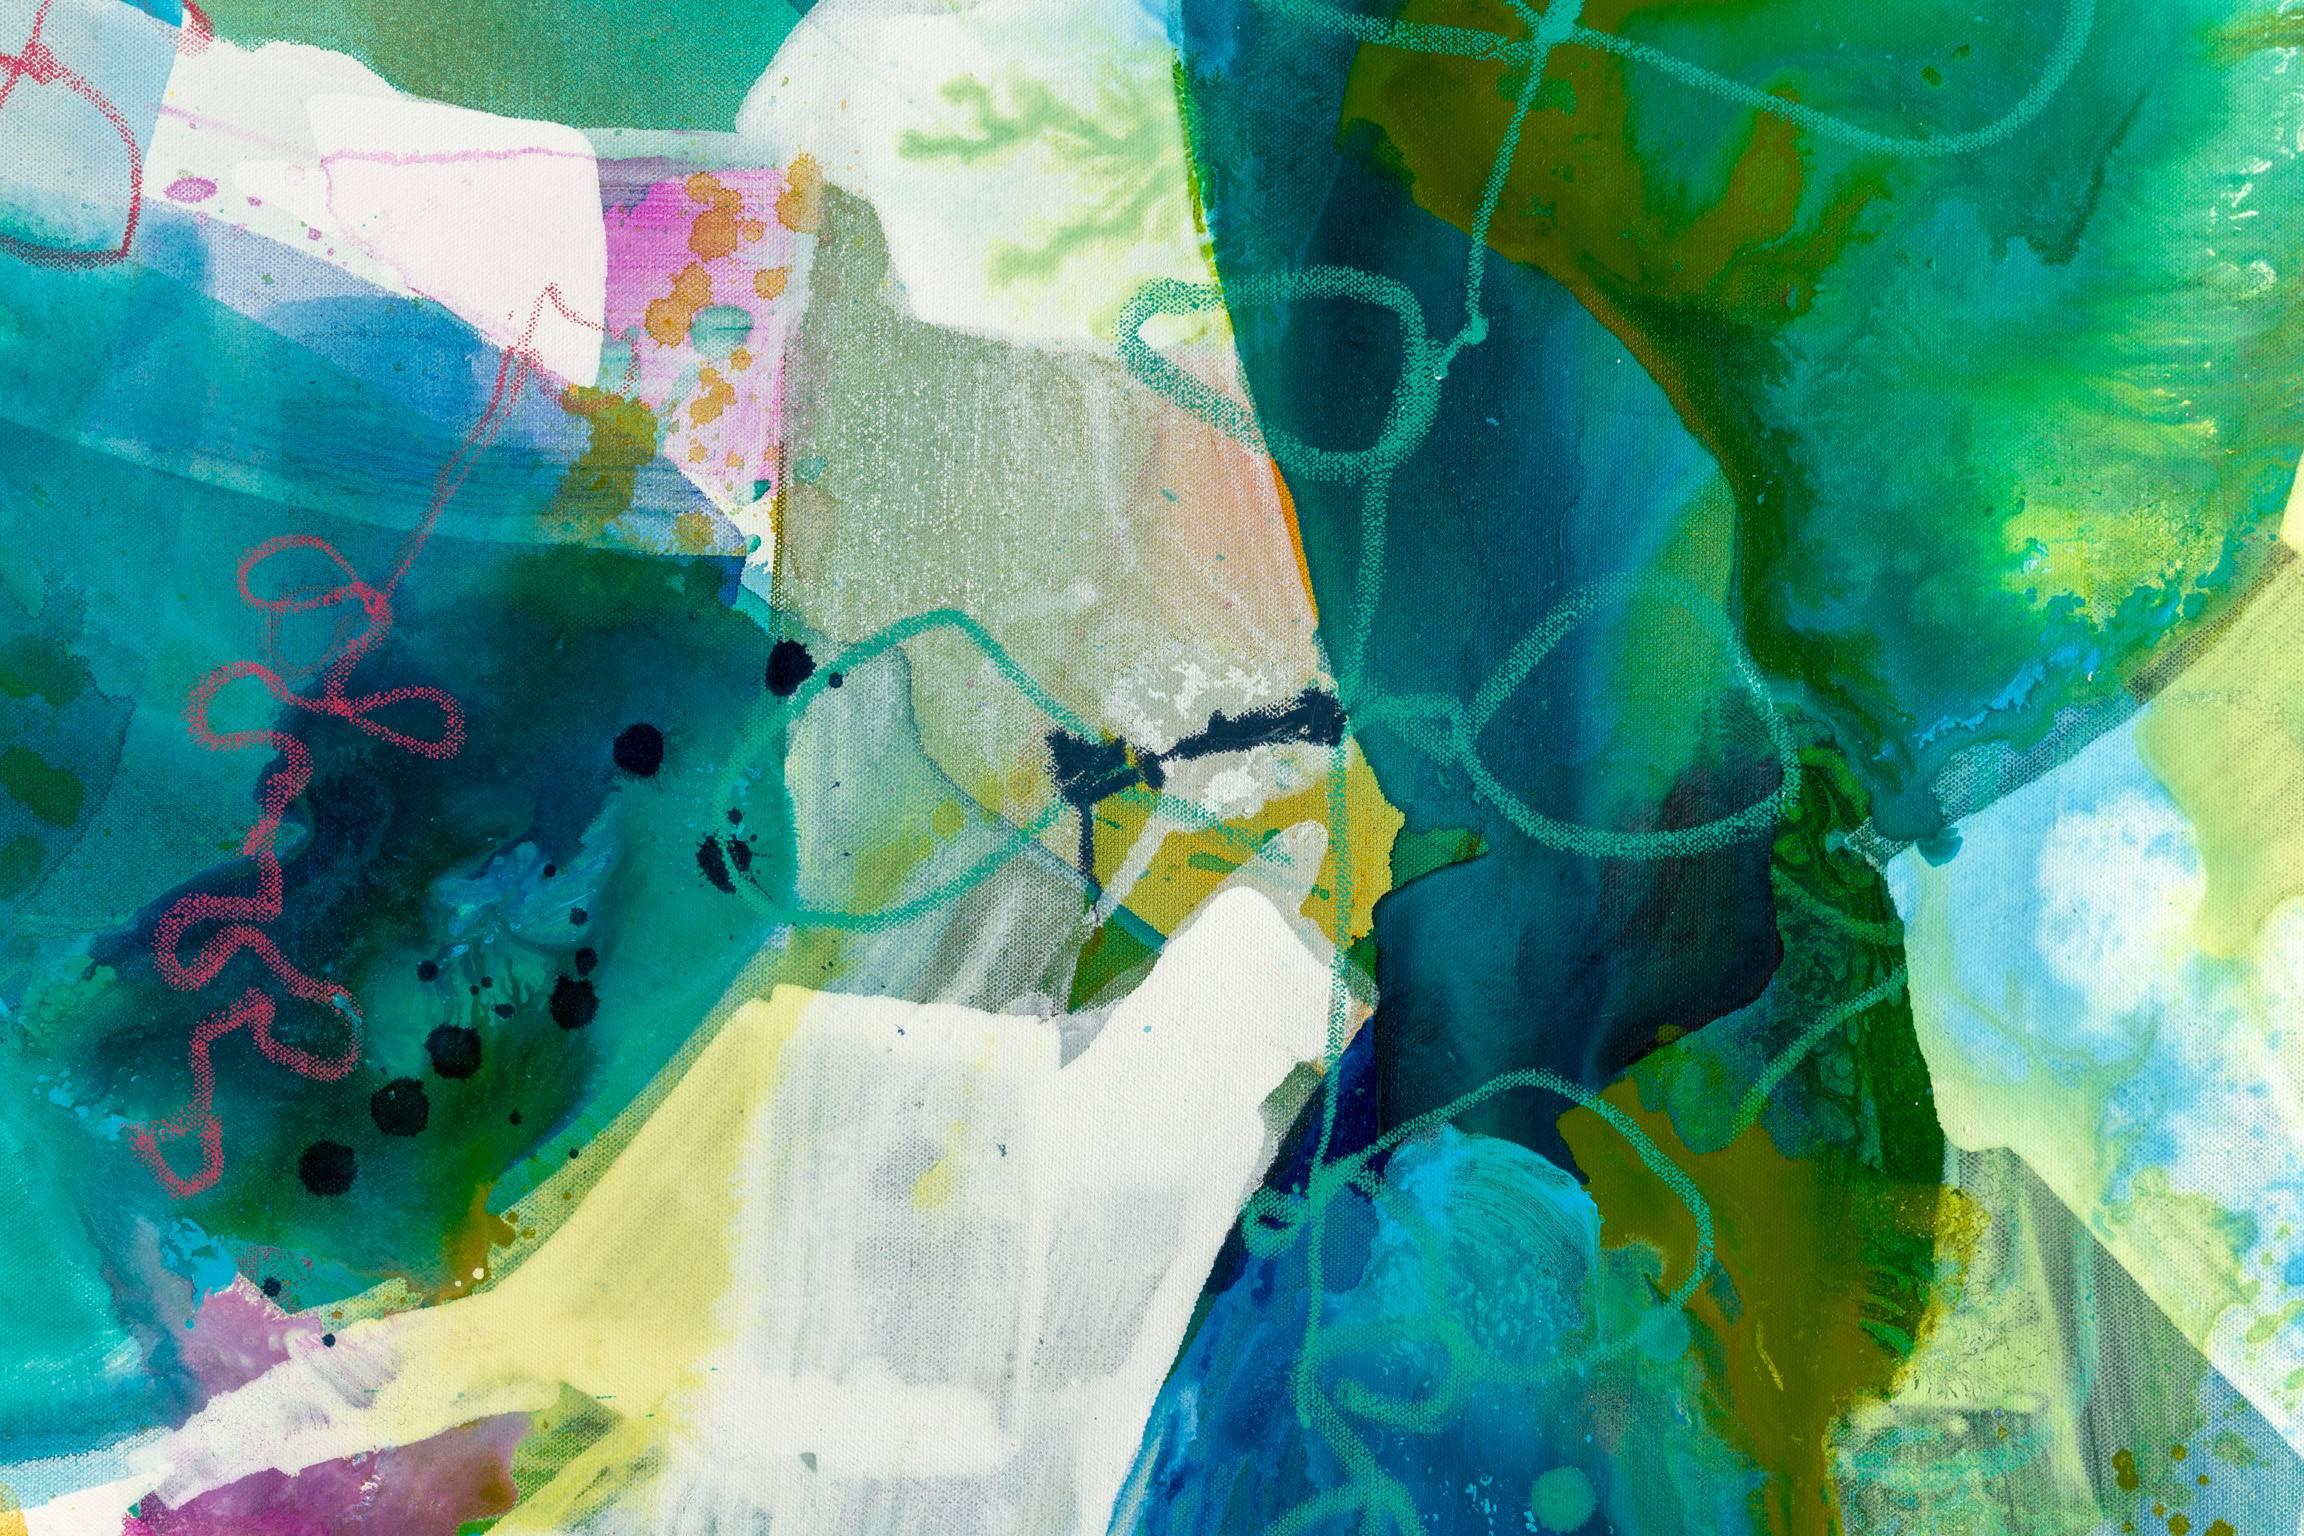 Water Petals XI - Abstract Mixed Media Art by Liz Barber Leventhal